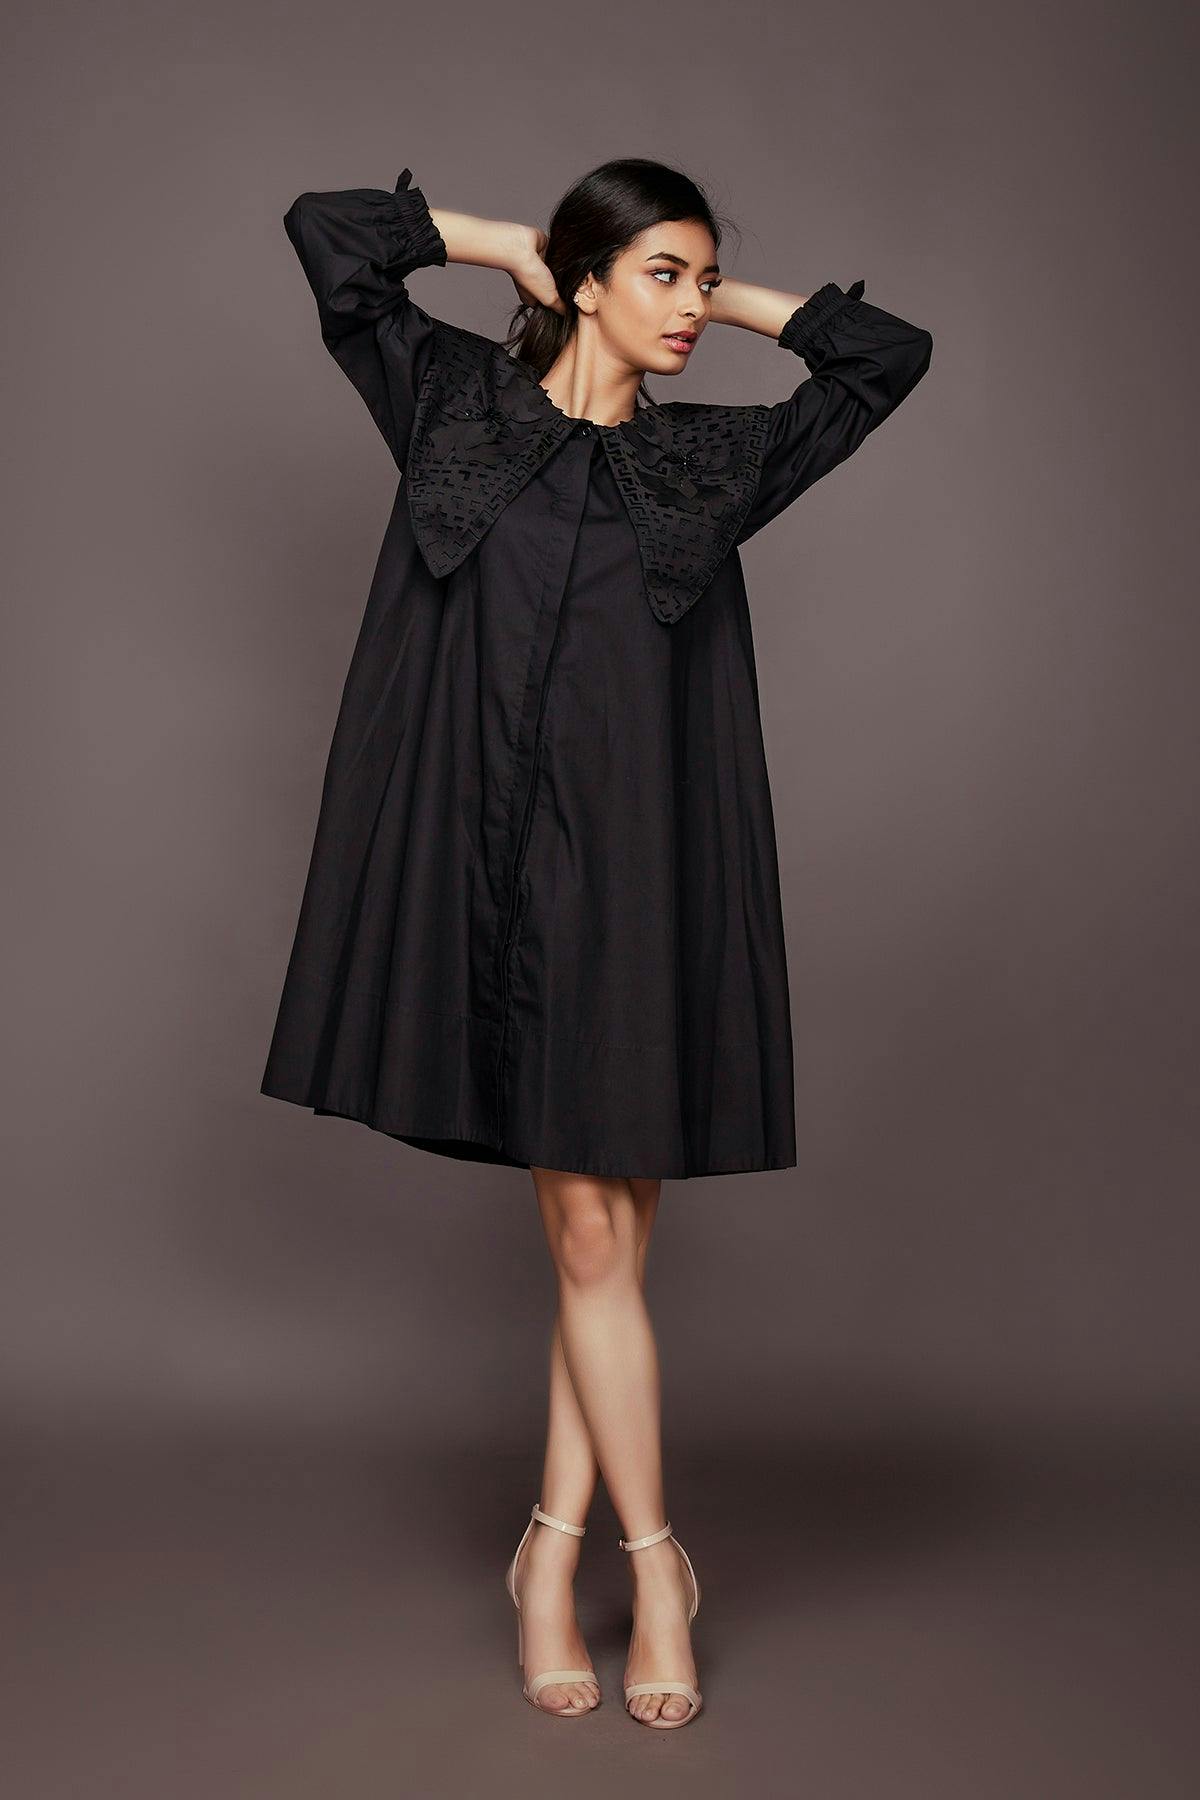 NN-1128 ::: Black Dress With Cutwork Collar, a product by Deepika Arora